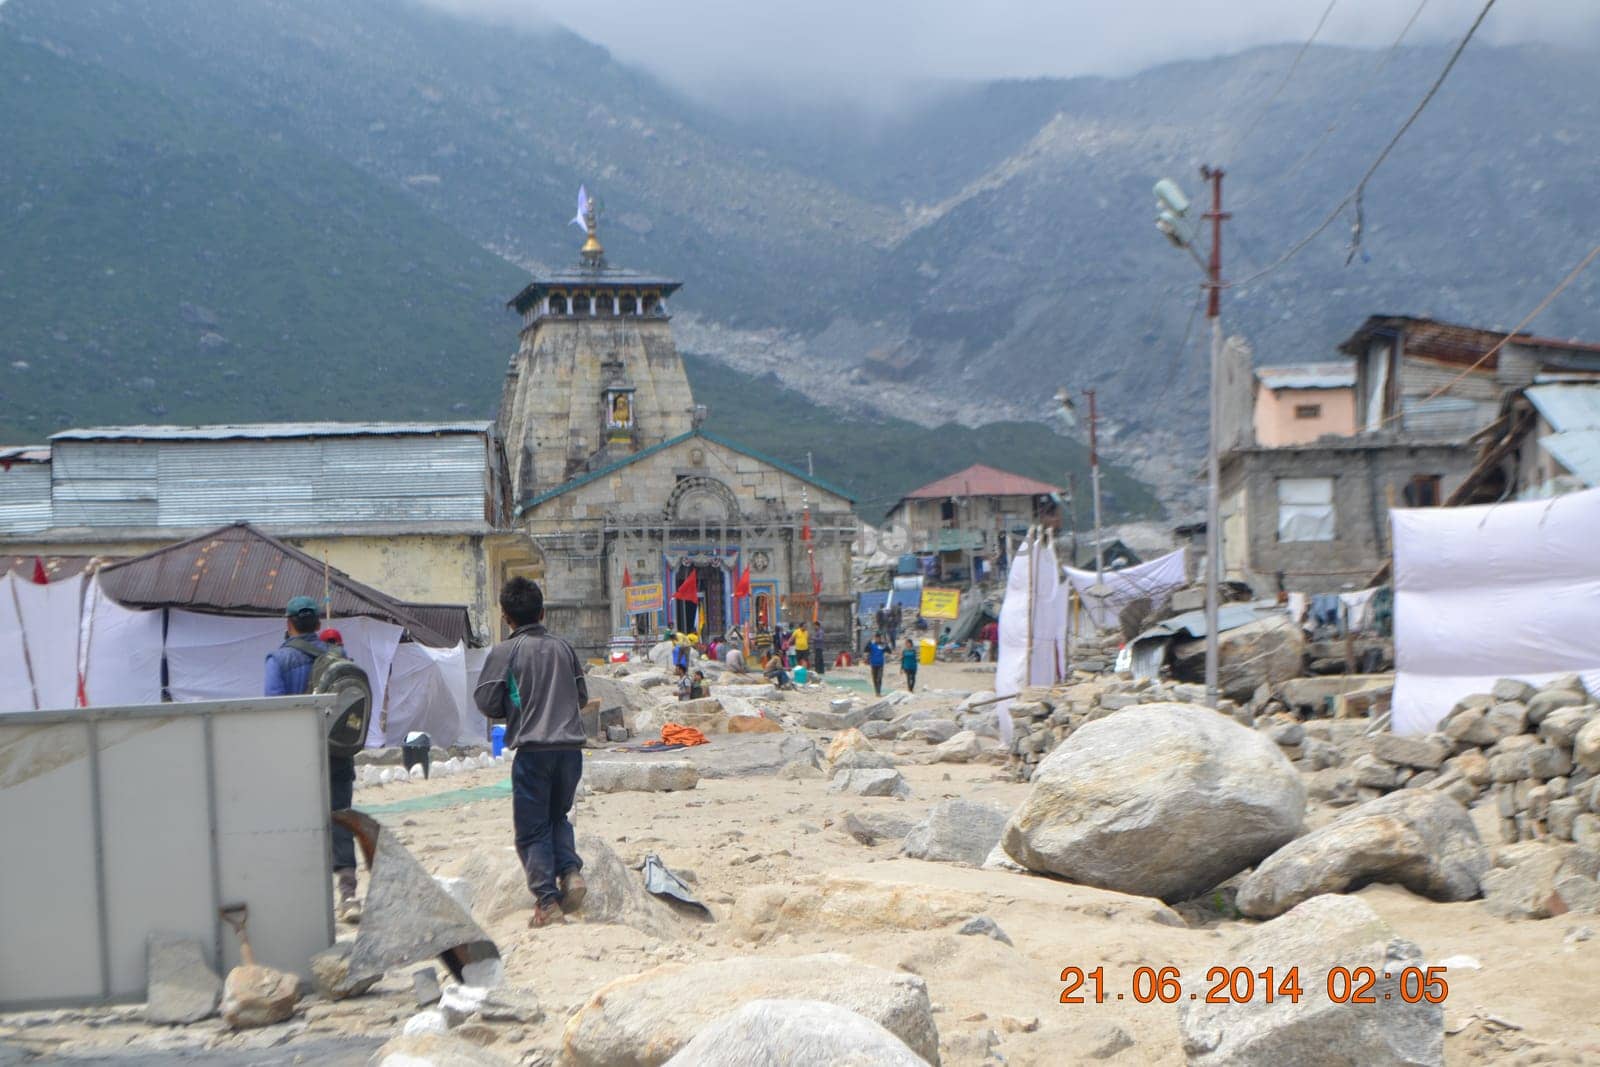 Kedarnath temple after Kedarnath disaster in 2013. Kedarnath was devastated on June 2013 due to landslides and flash floods that killed more than 5000 people.